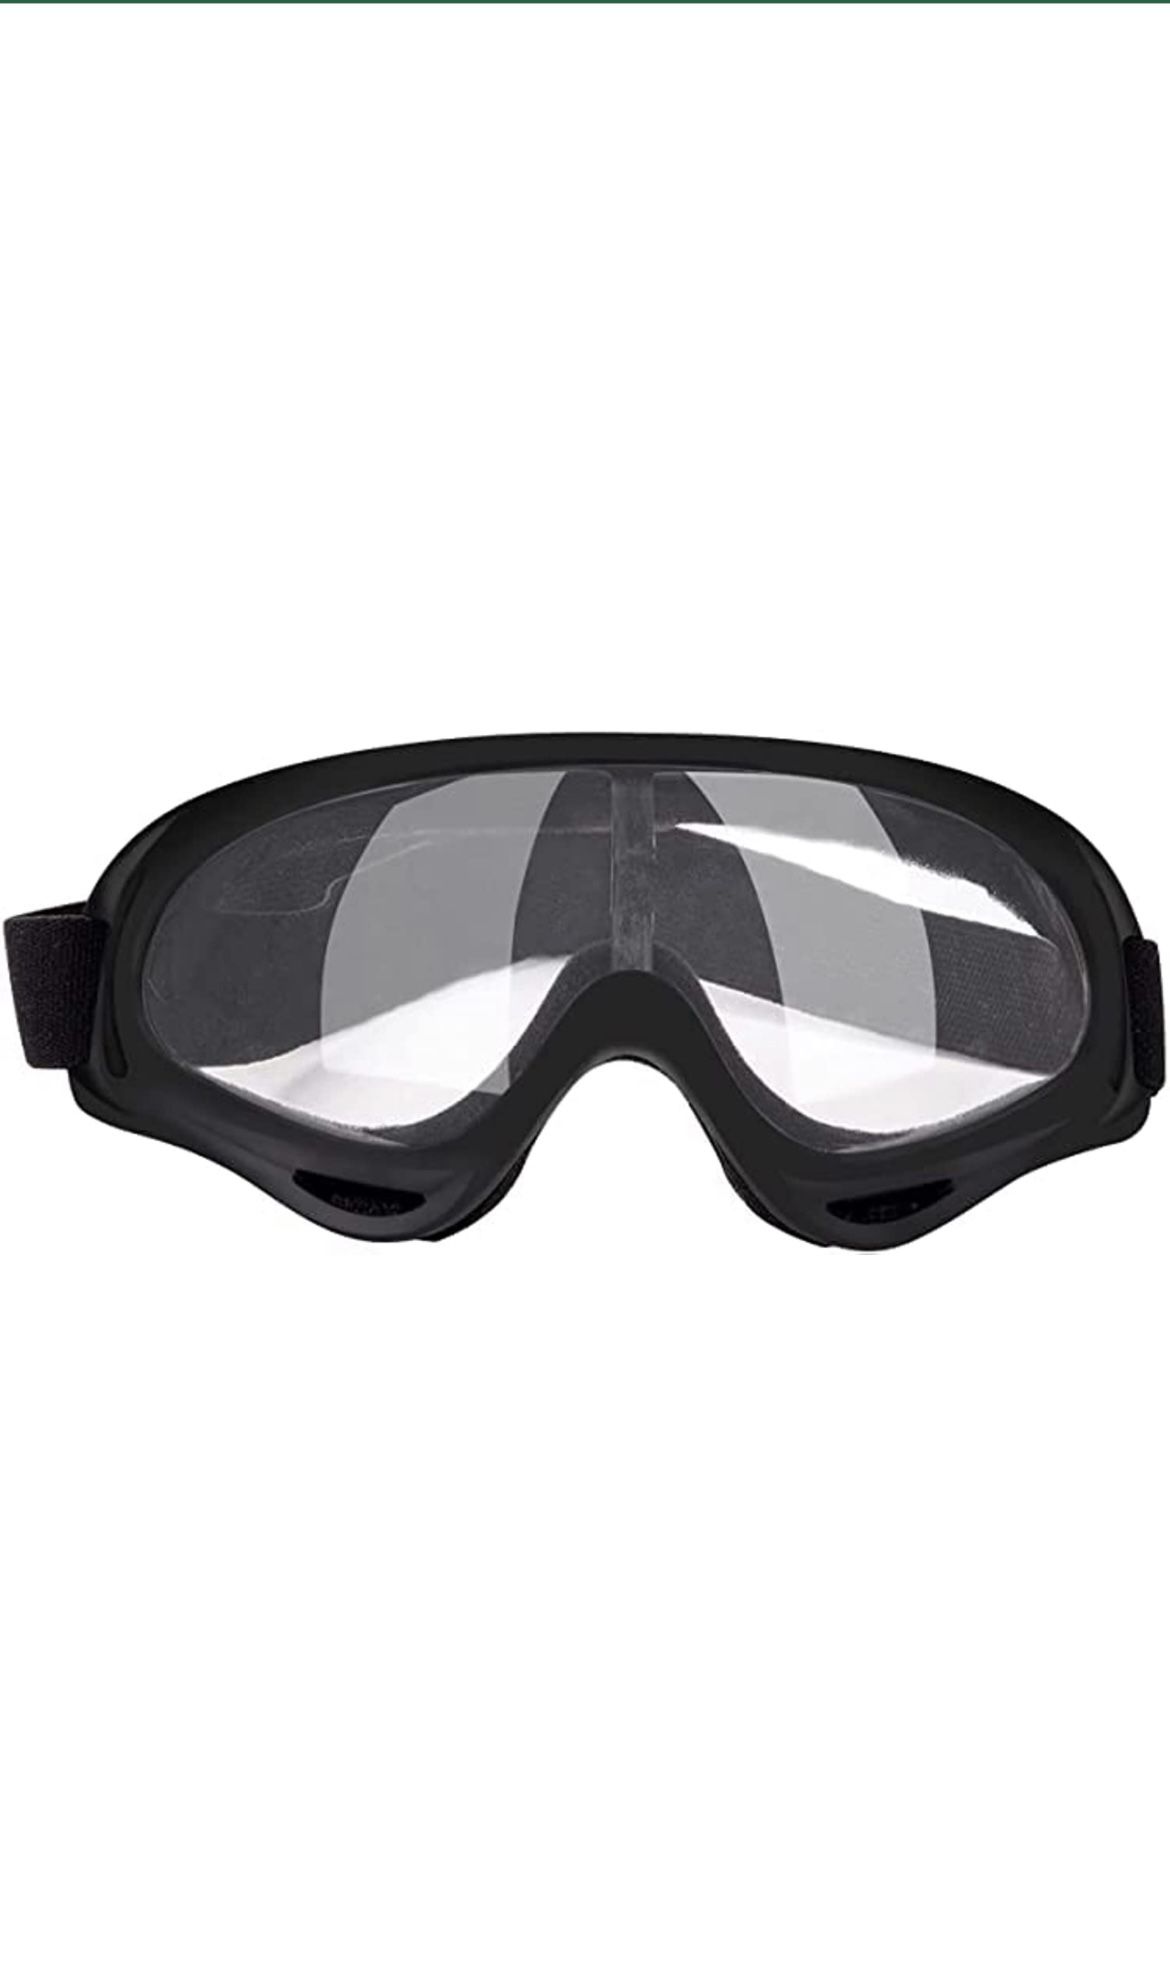 Motorcycle Goggles, ATV Dirt Bike Anti Fog UV Windproof Goggle, Off-road MTB Motocross Glasses for Men and Women,